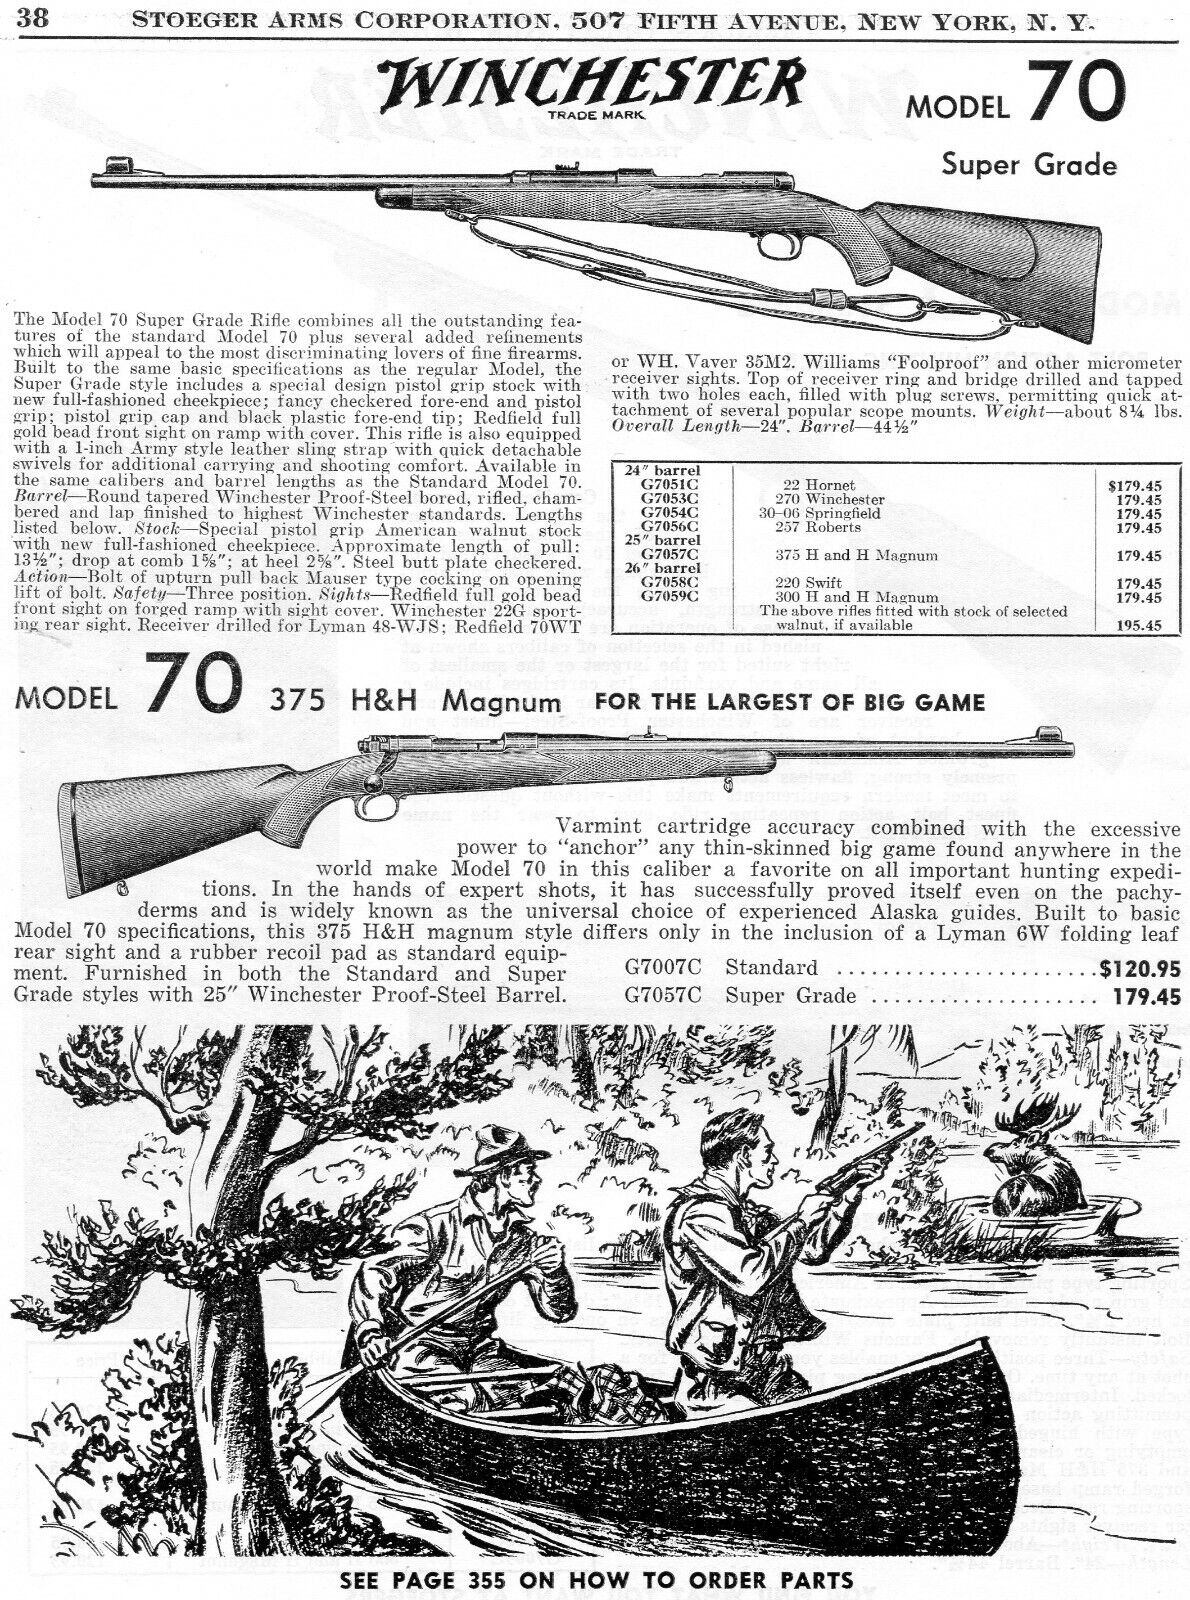 1953 Print Ad of Winchester Model 70 Super Grade & 375 H&H Magnum Rifle